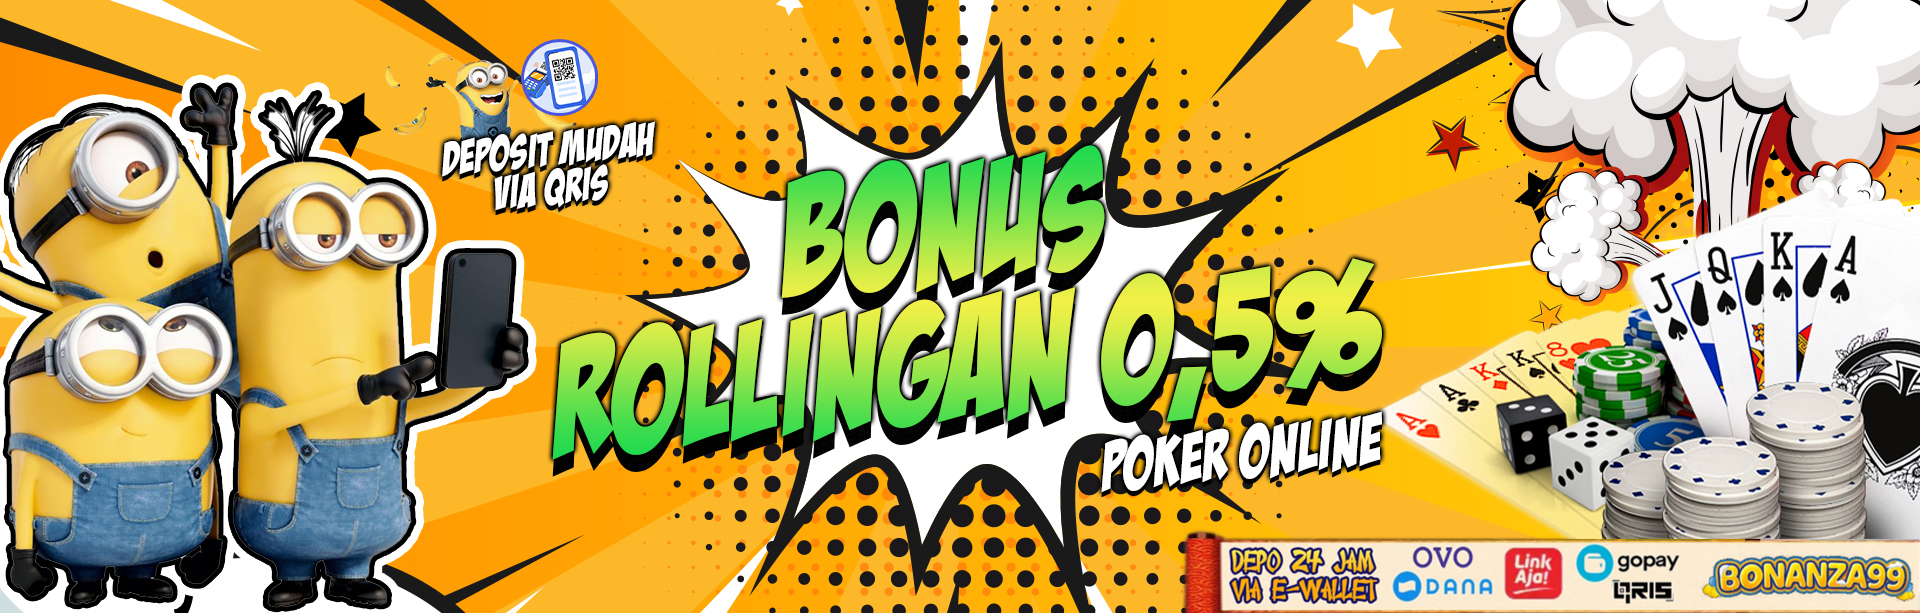 Bonus Rollingan Poker Online 0.5%